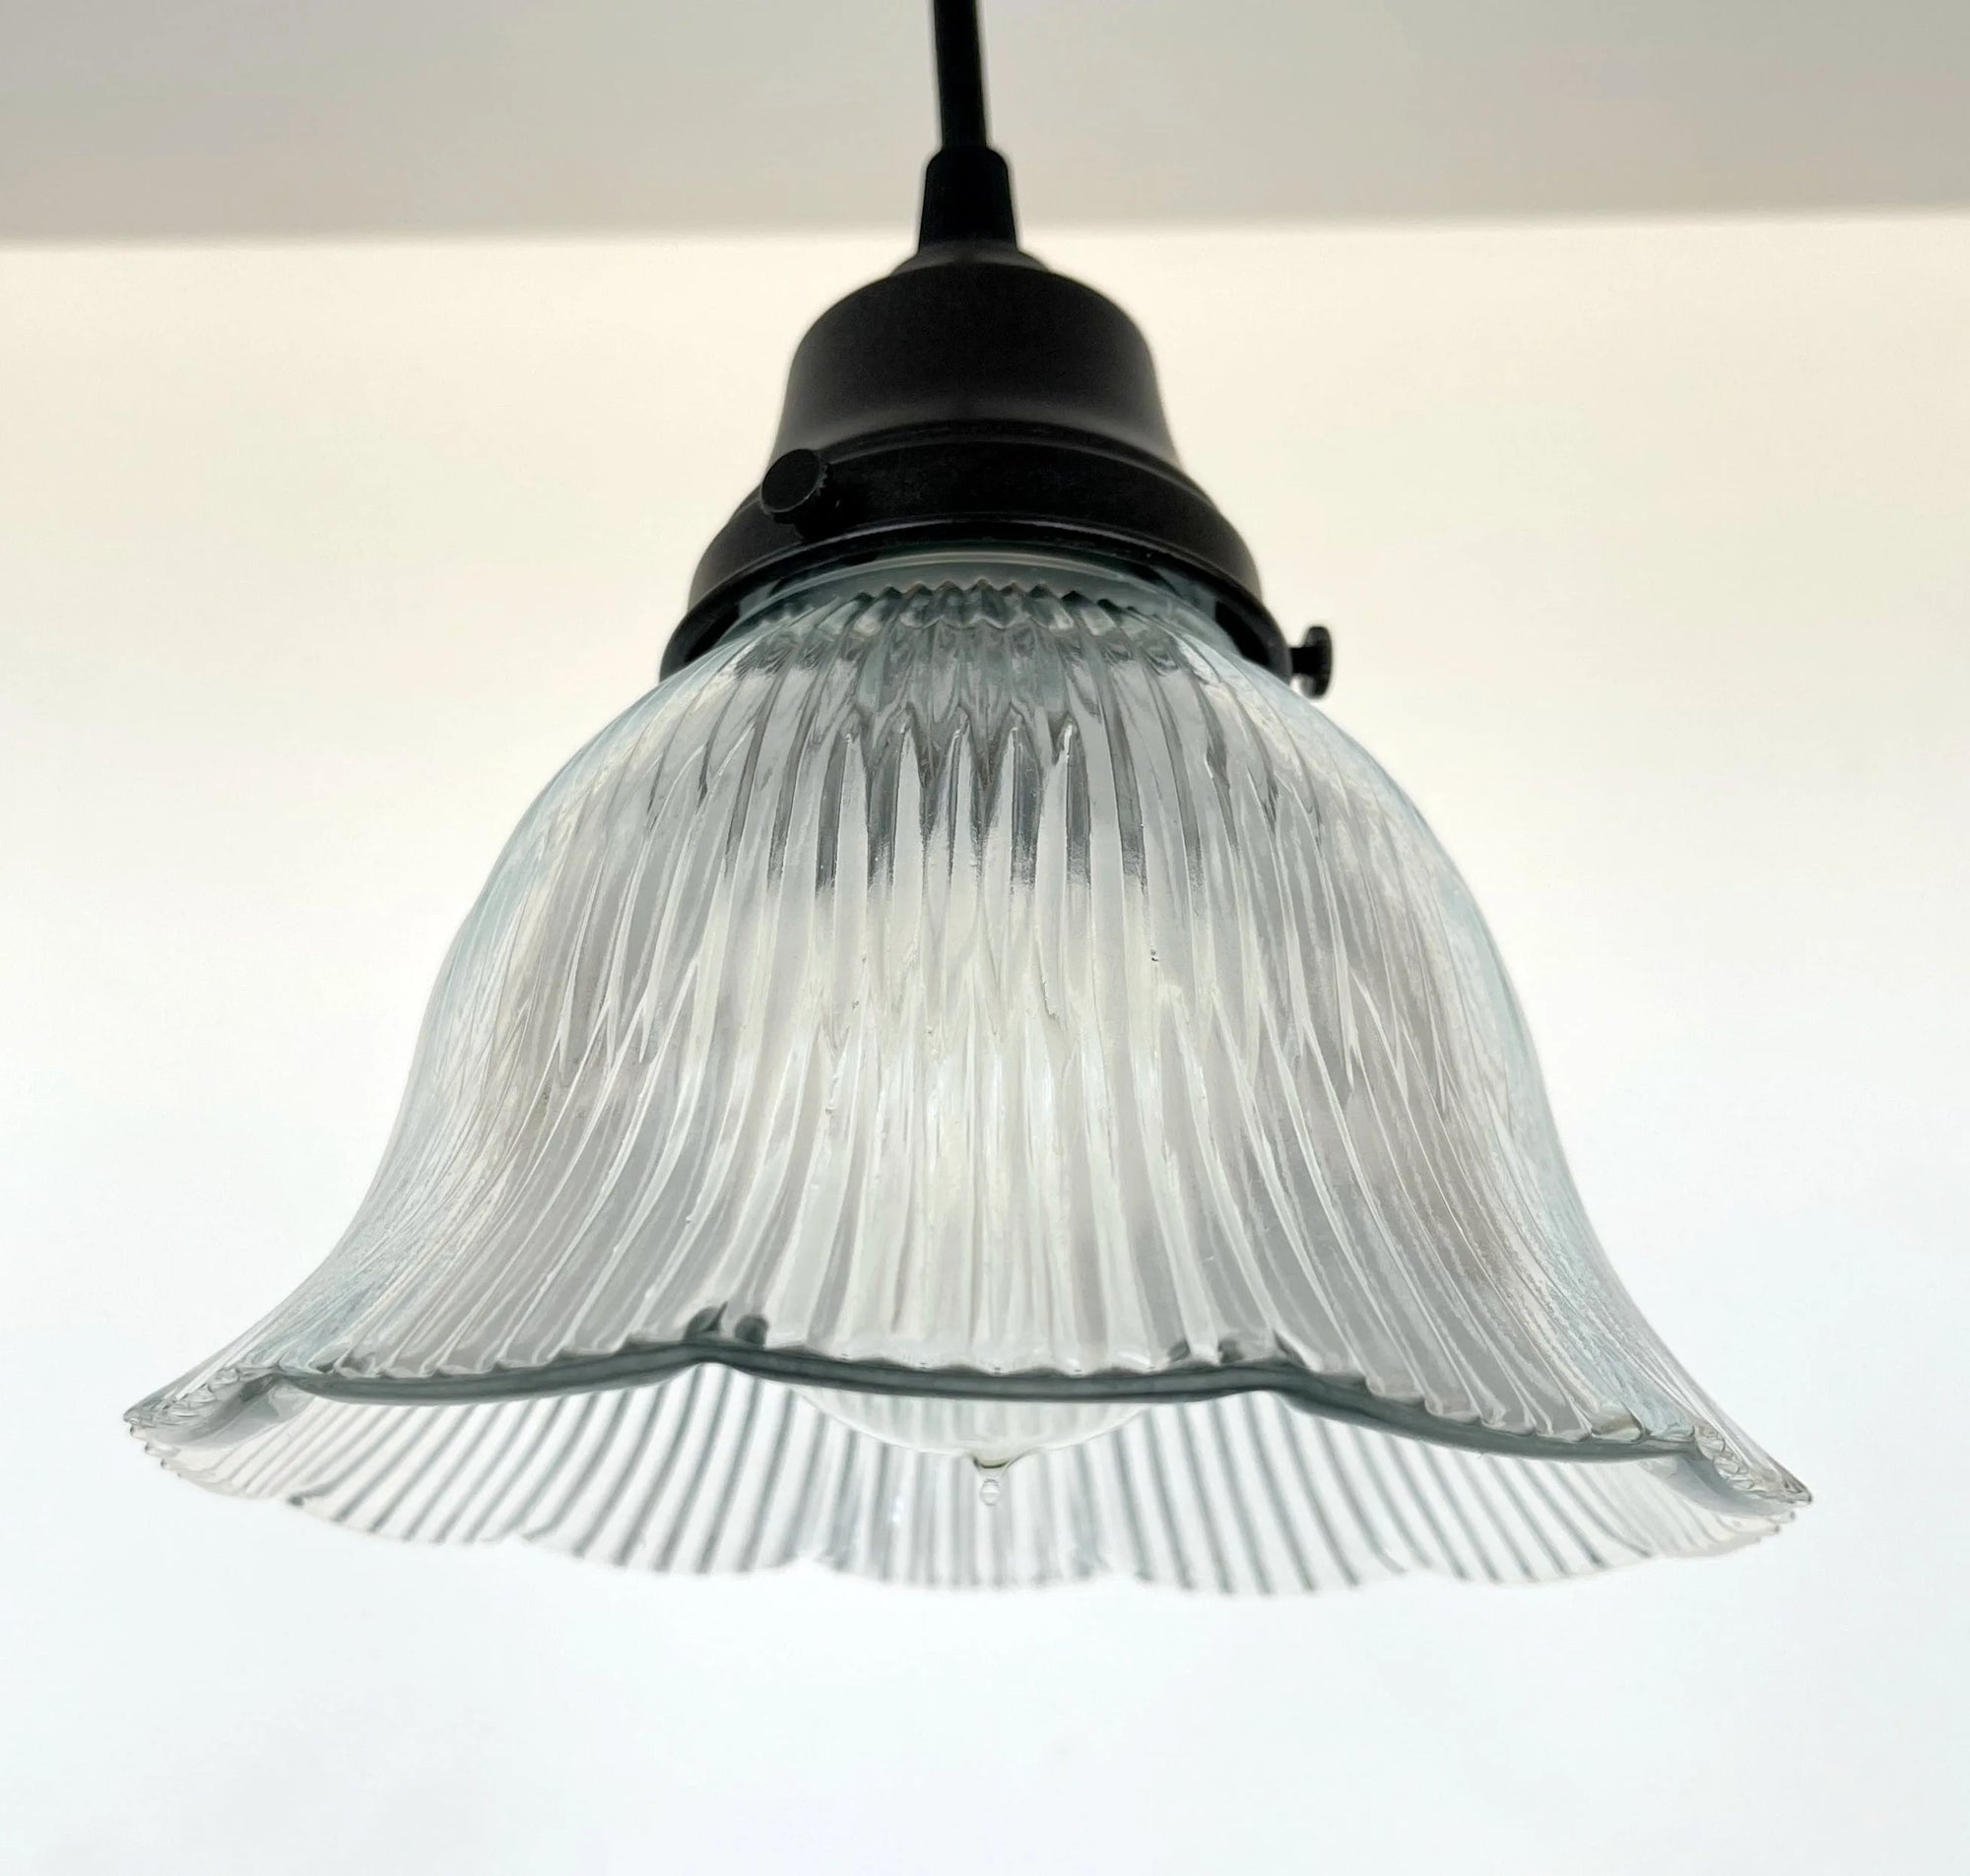 New Dome Holophane Pendant Light The Lamp Goods